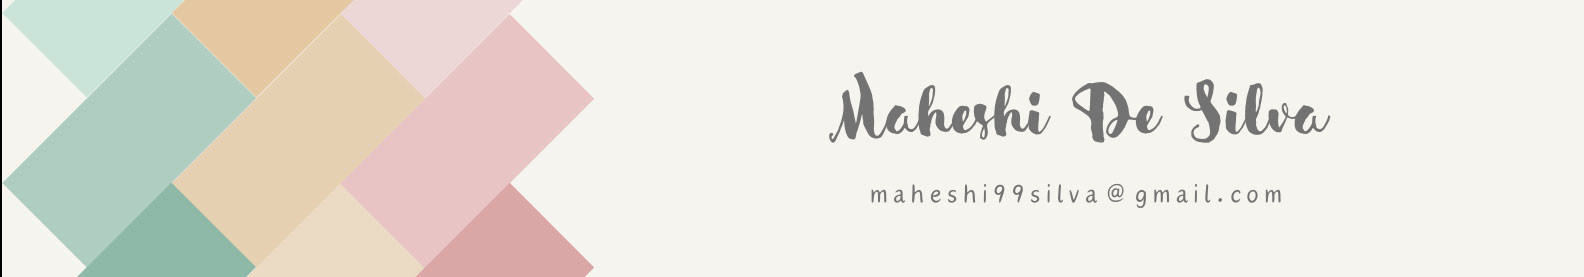 Maheshi De Silva's profile banner